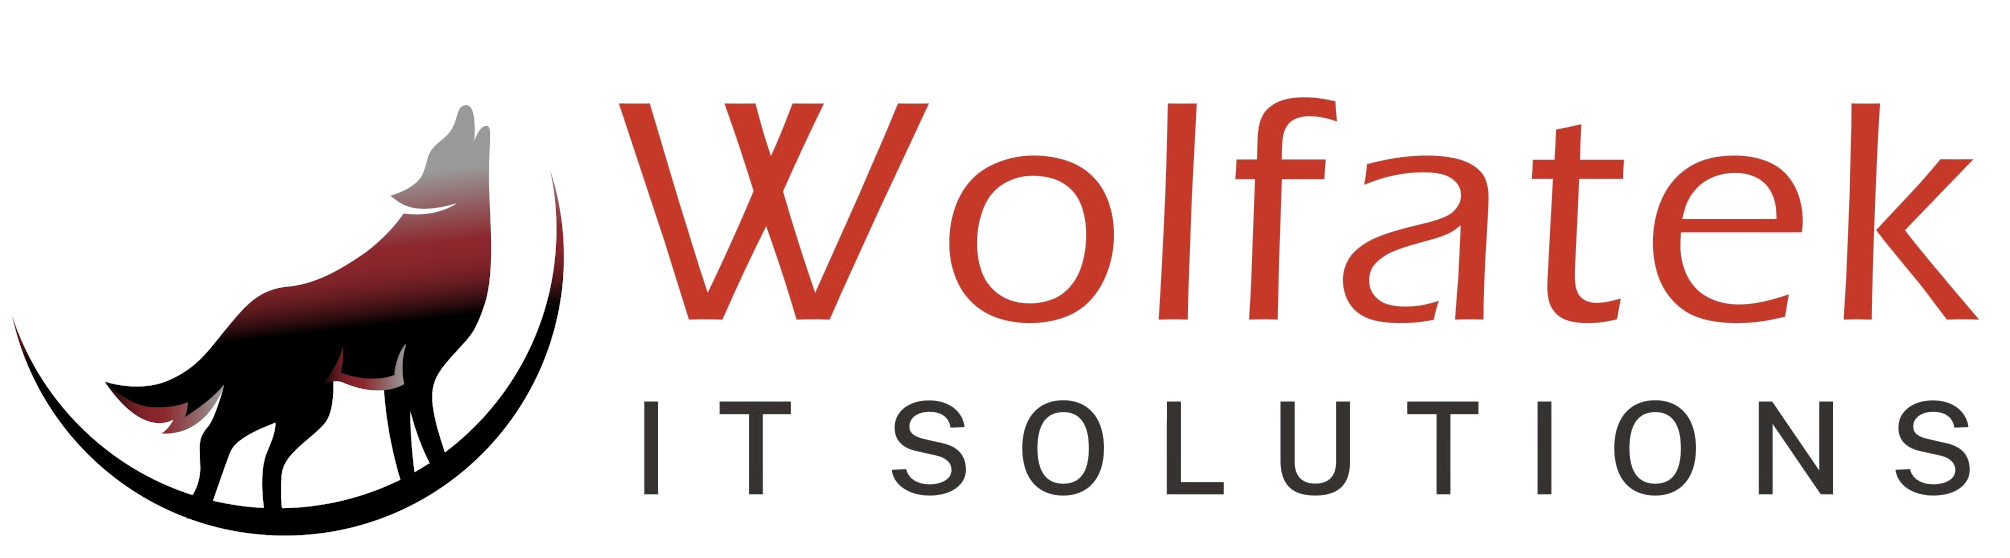 Wolfatek Evolutions | Custom Software |  Electronic Voting & Elections |  Enterprise ICT Solutions